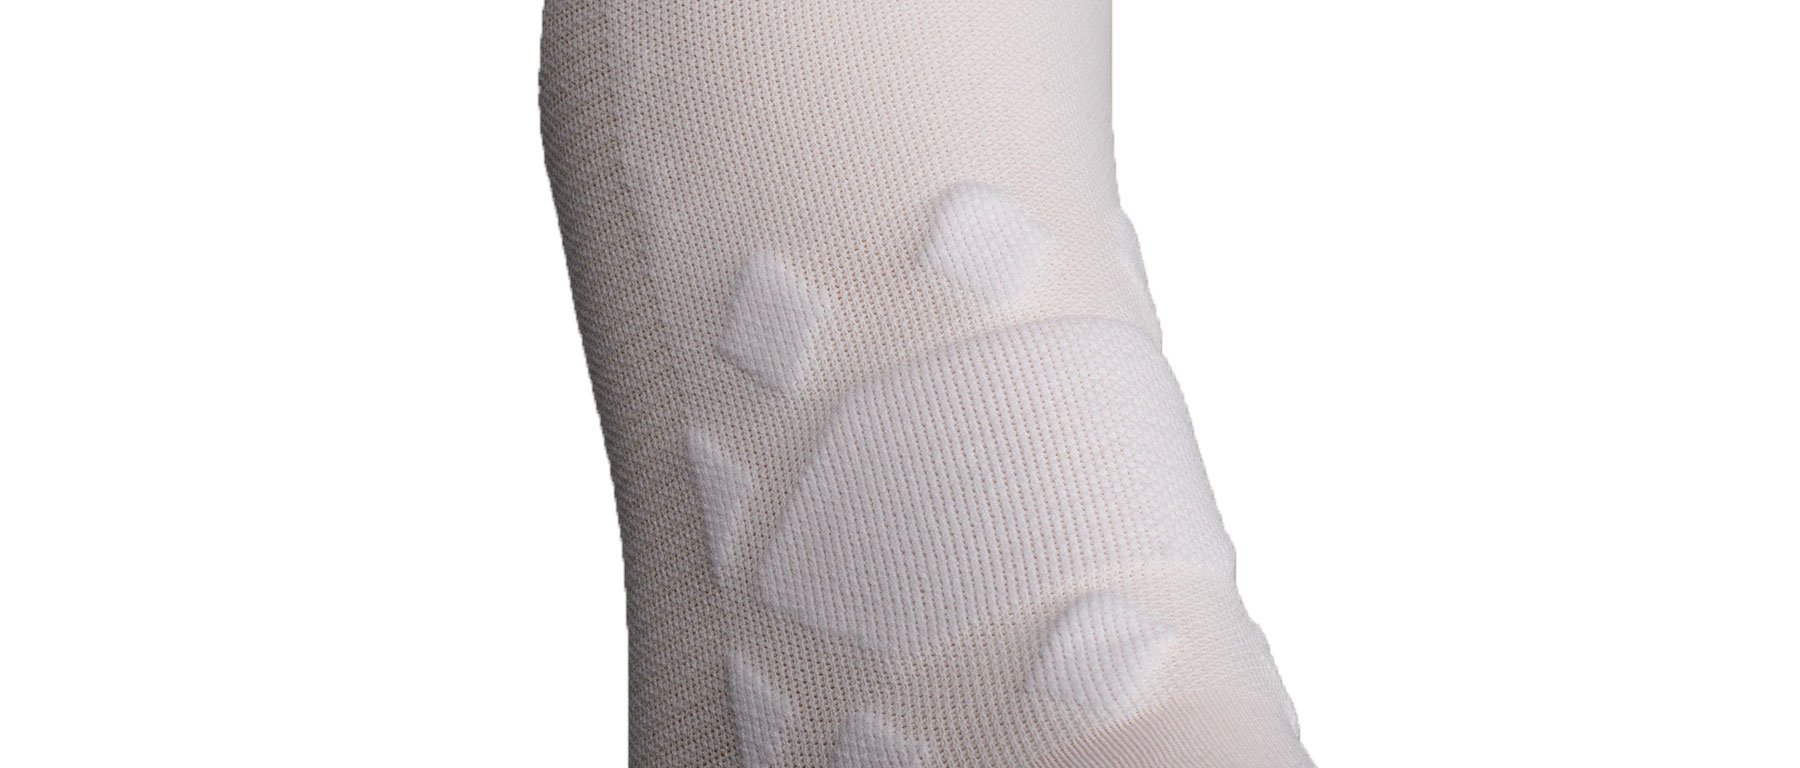 Shimano S-Phyre Tall Socks